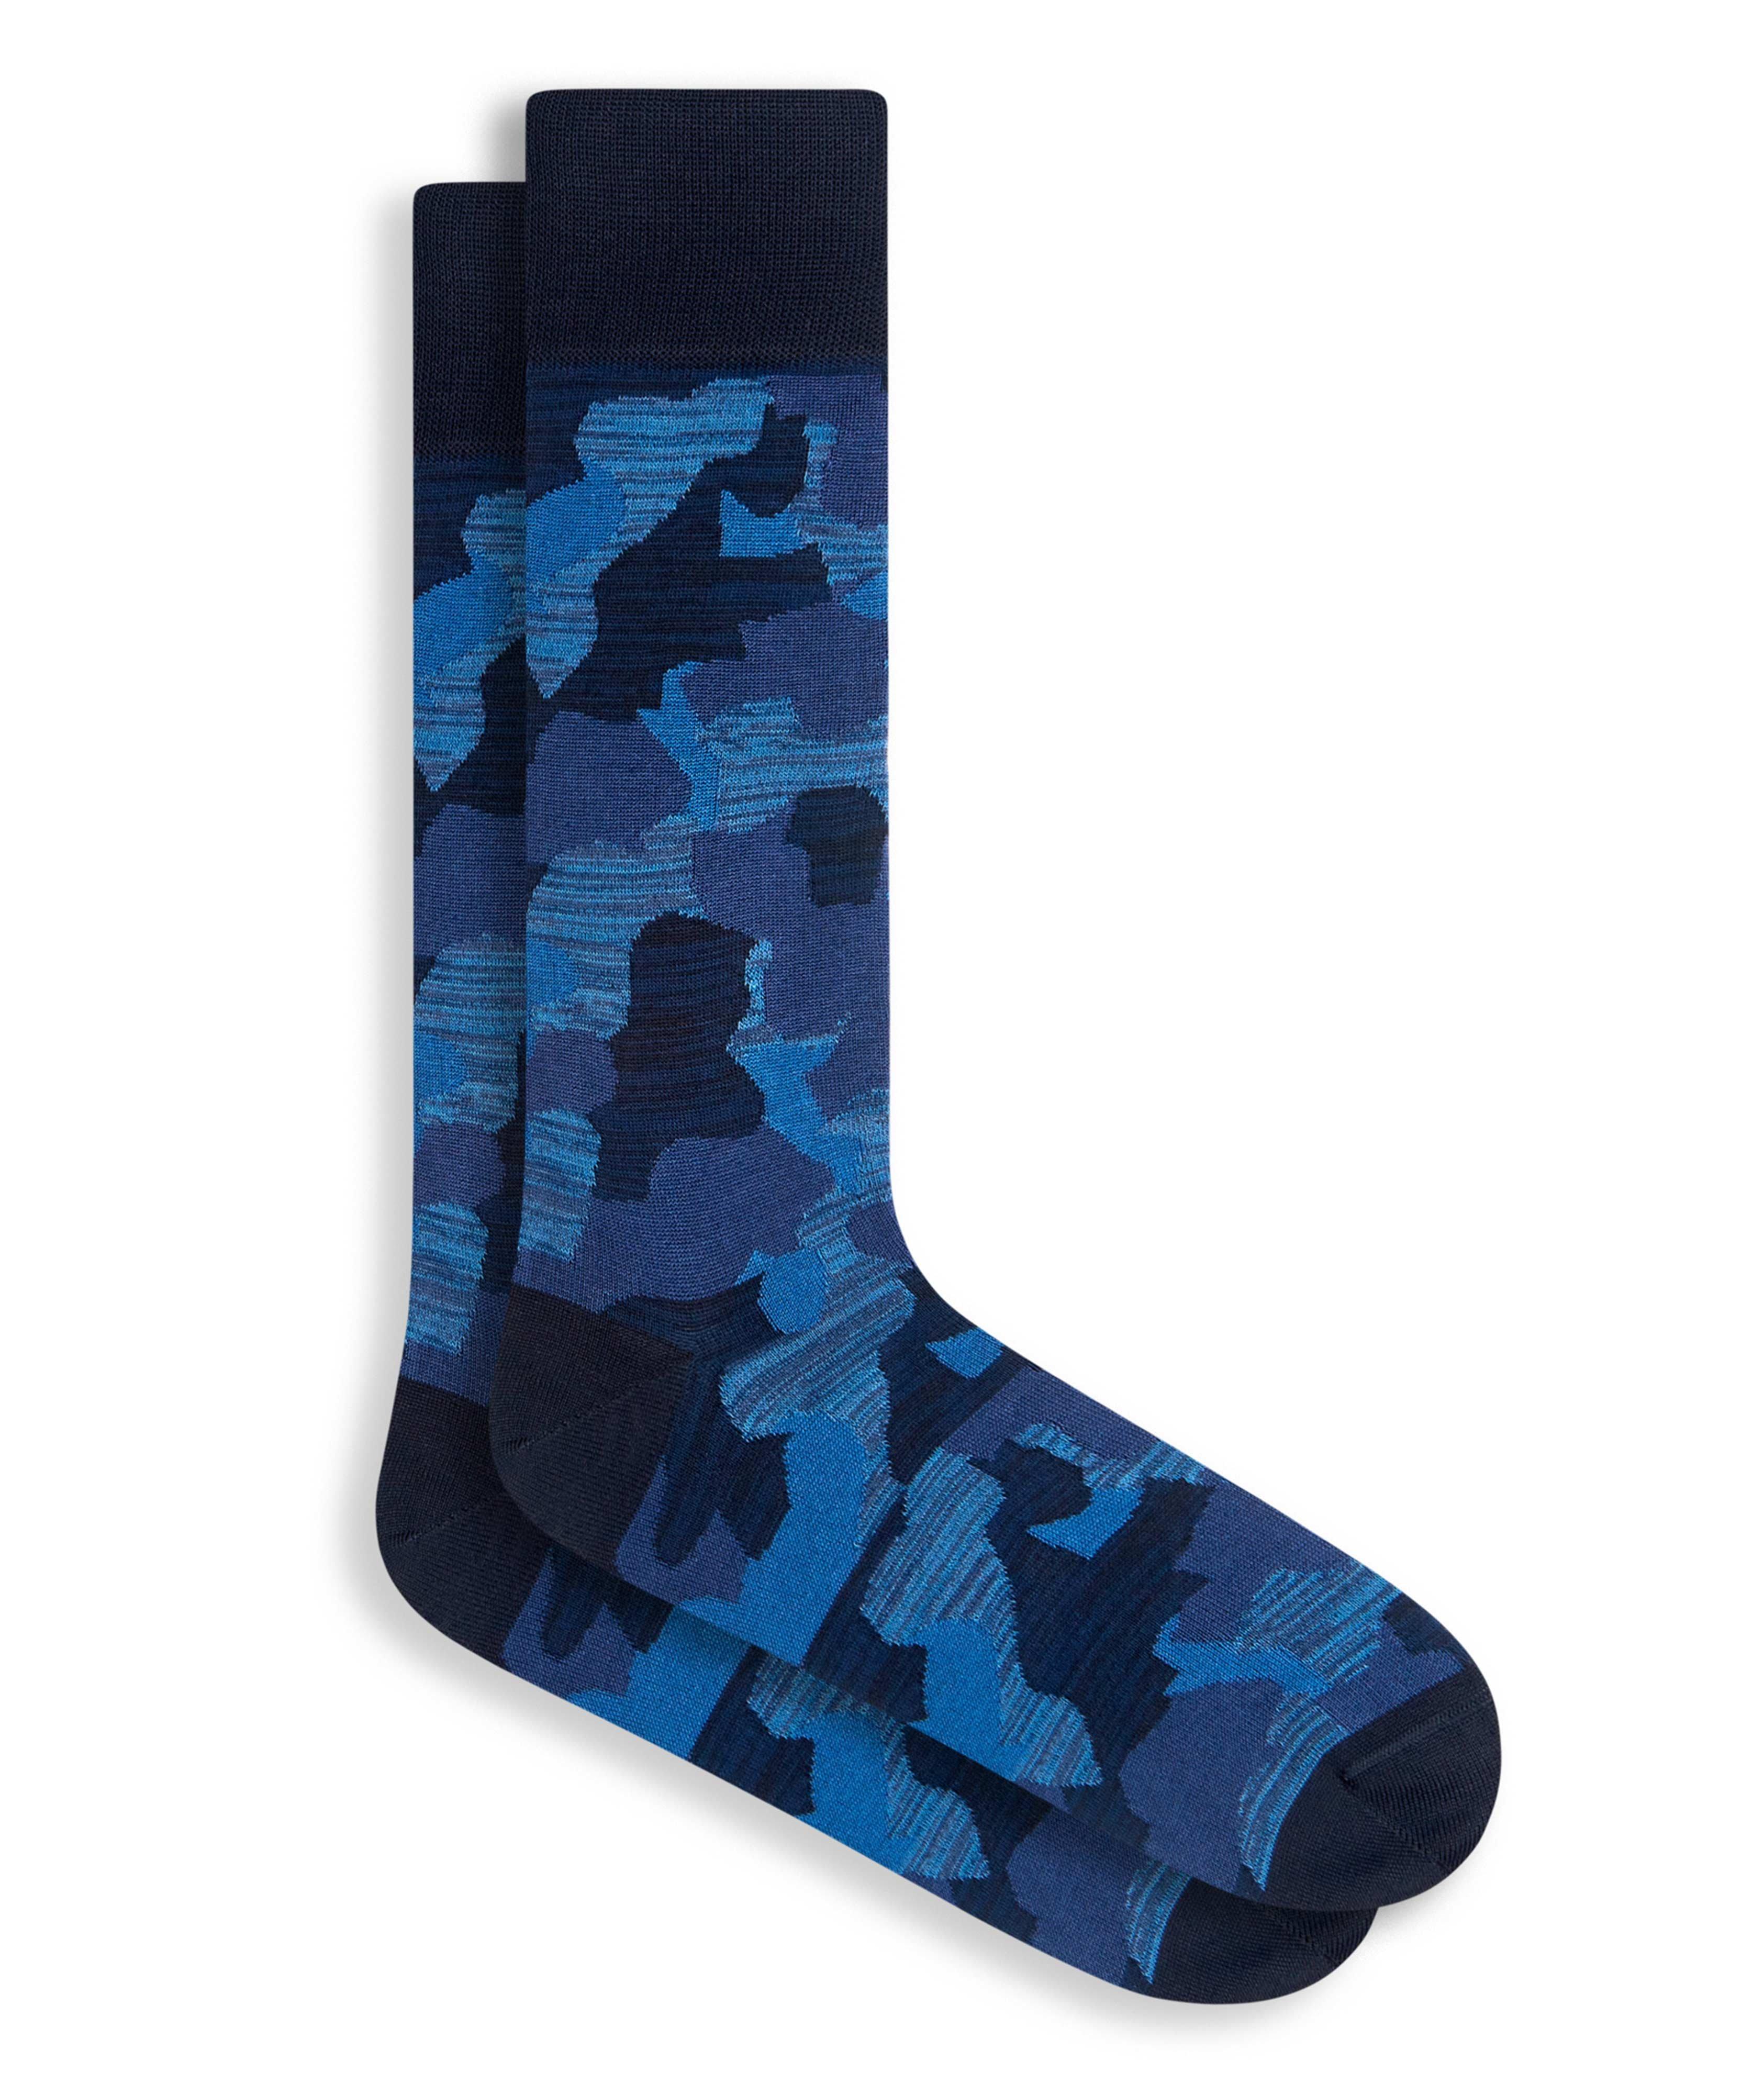 Camo Printed Stretch-Cotton Socks image 0